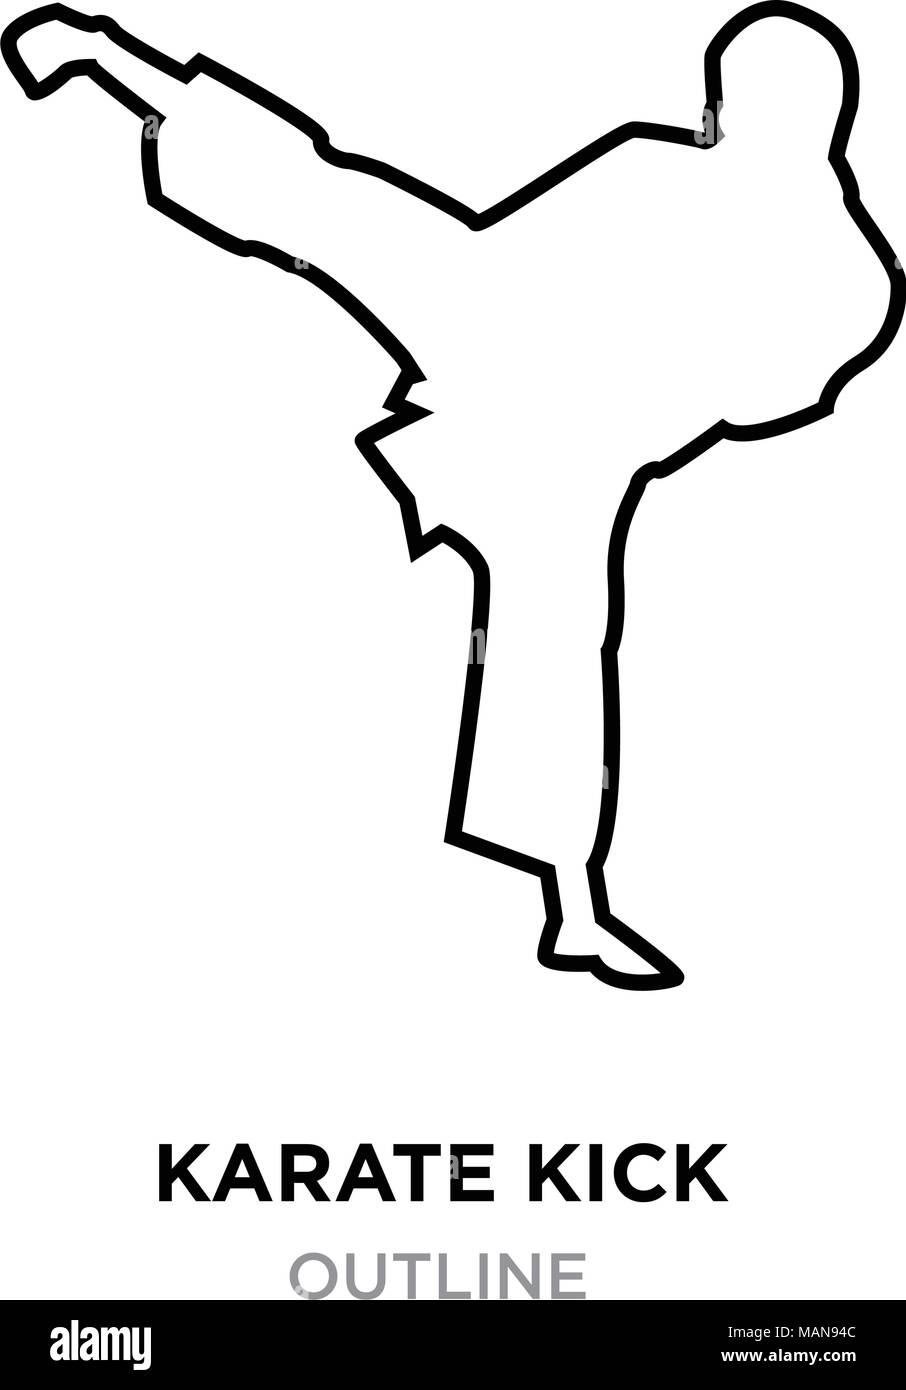 karate kick outline on white background, vector illustration Stock